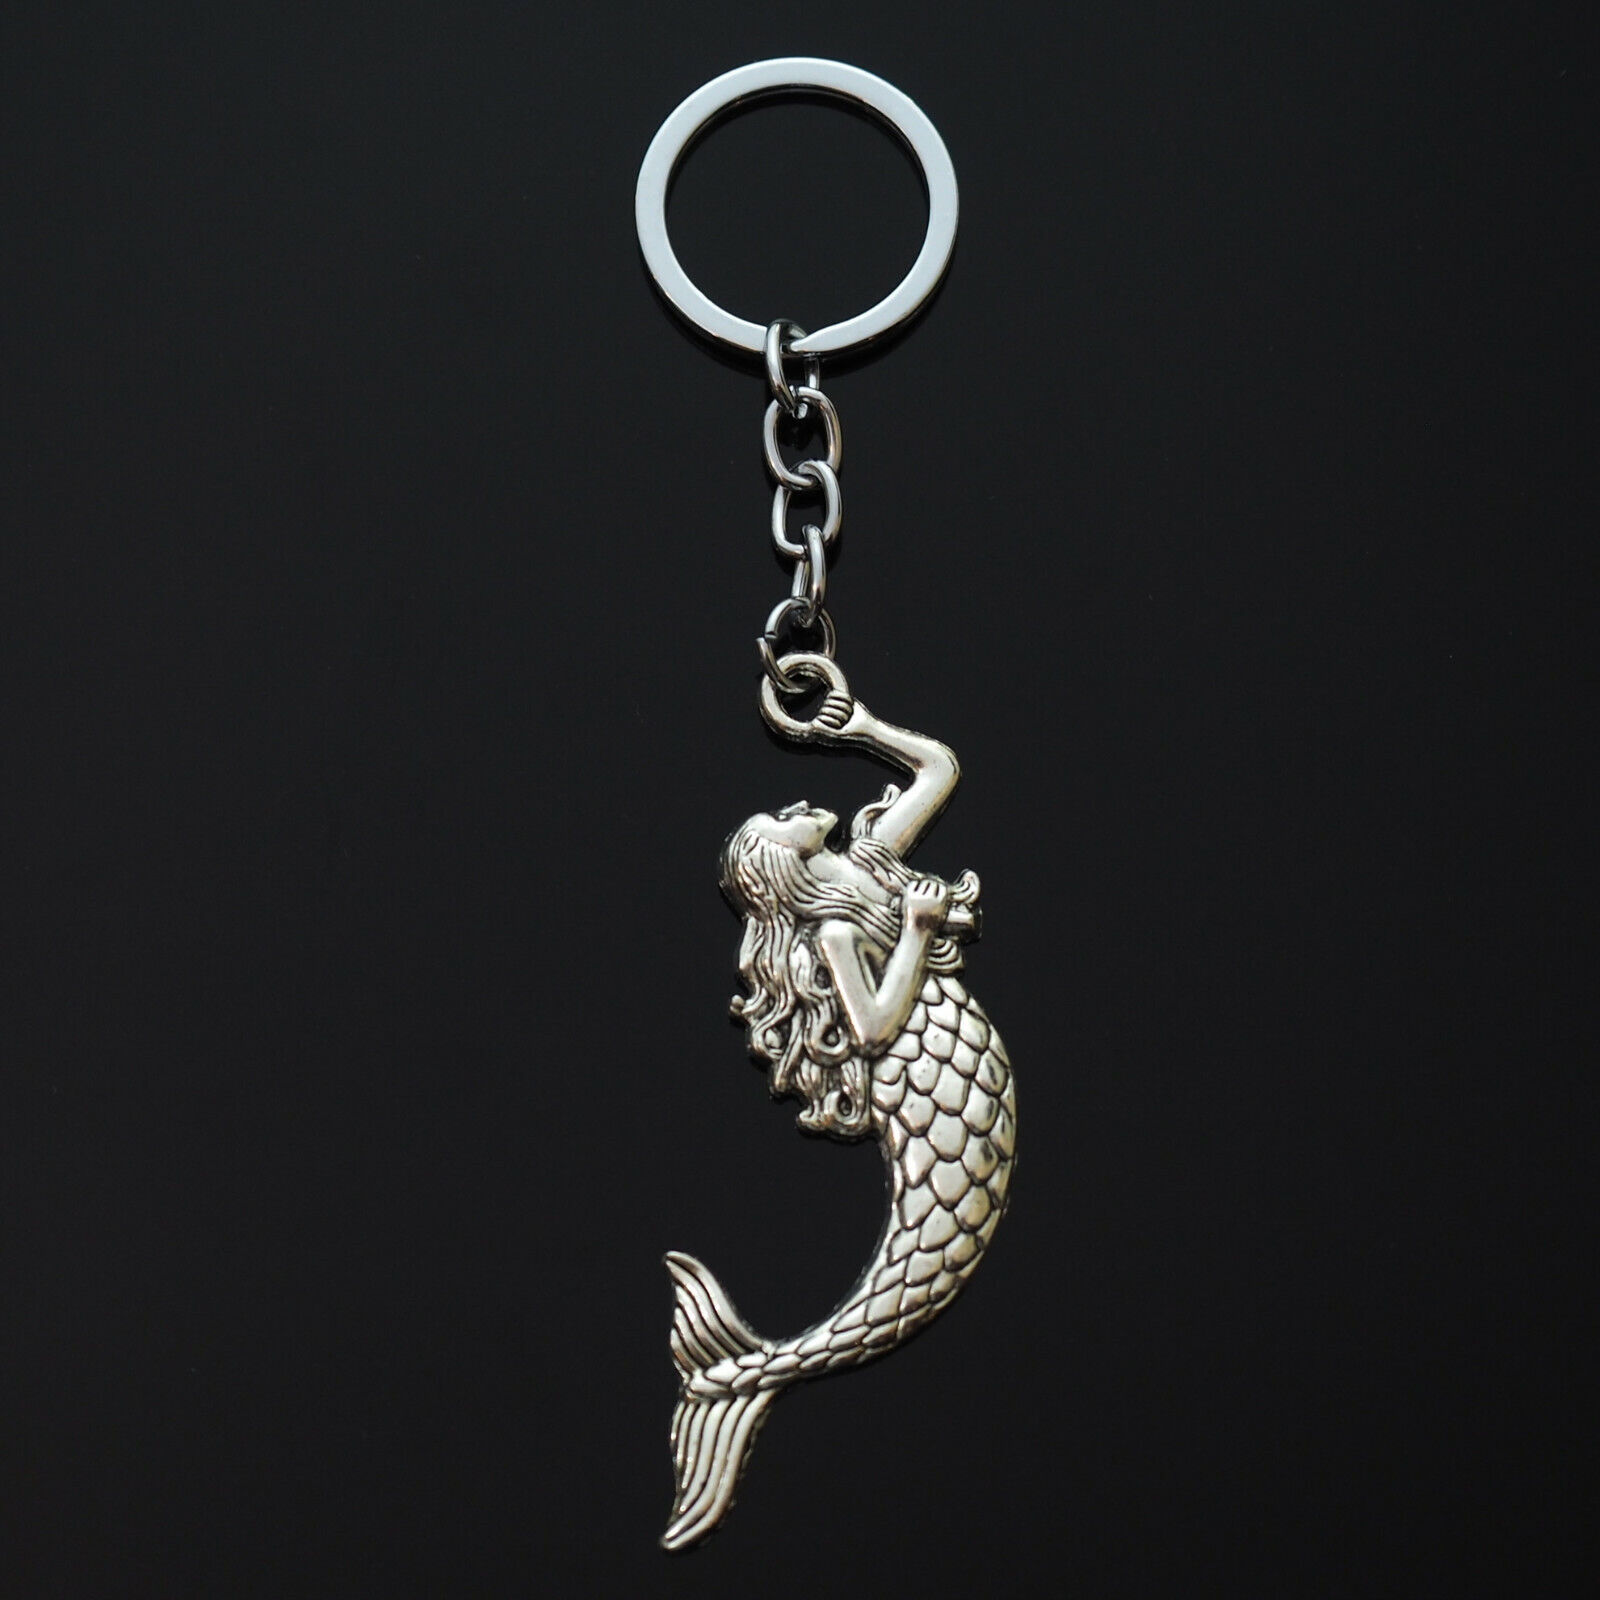 Mermaid Key Chain Charm Pendant Keychain Siren Goddess of the Sea Water Nymph